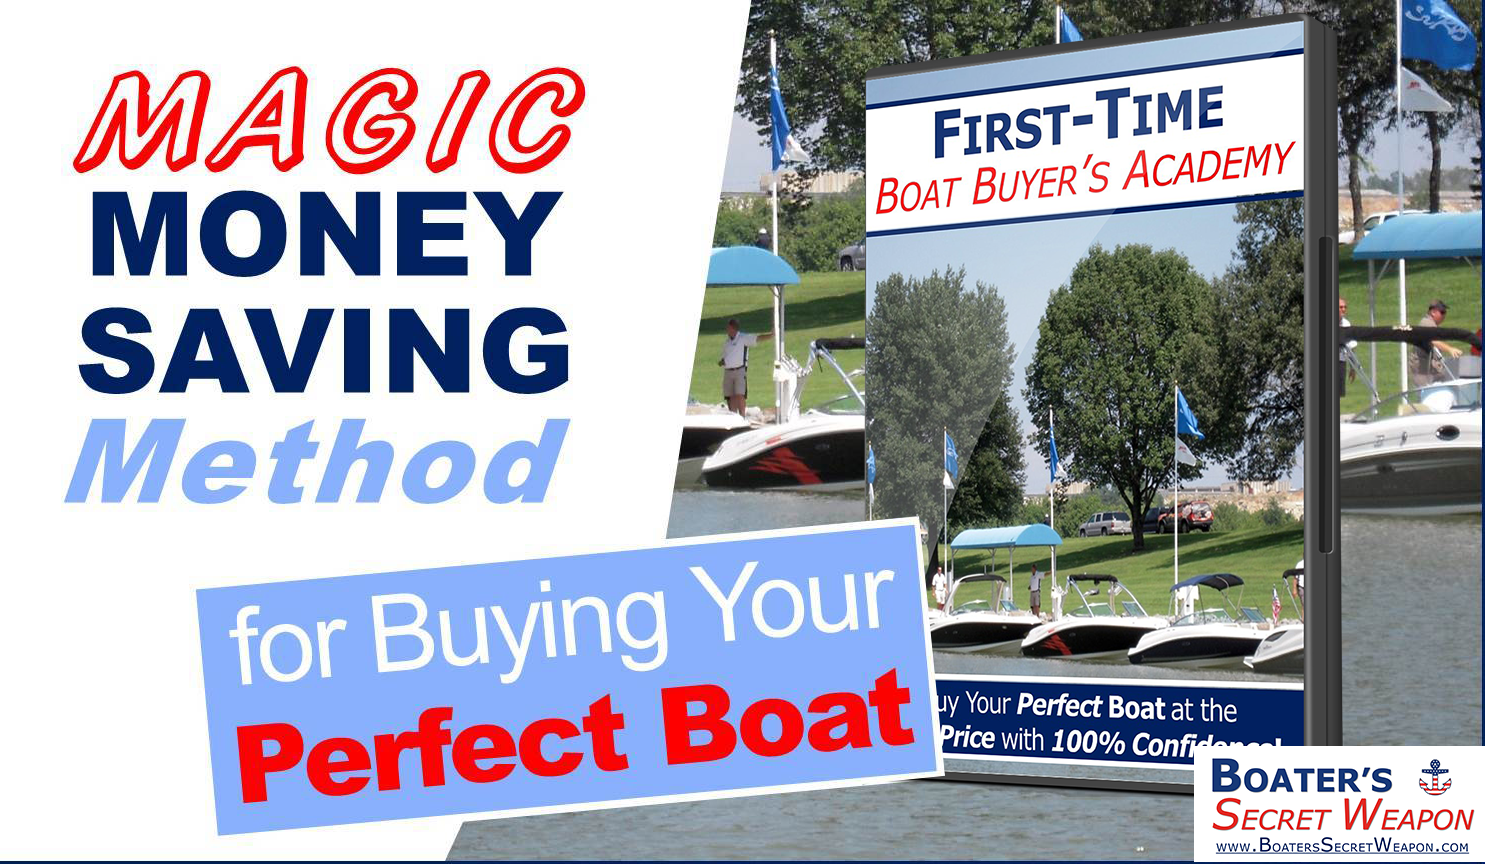 First-Time Boat Buyer's Academy & Magic Money Saving Method $57